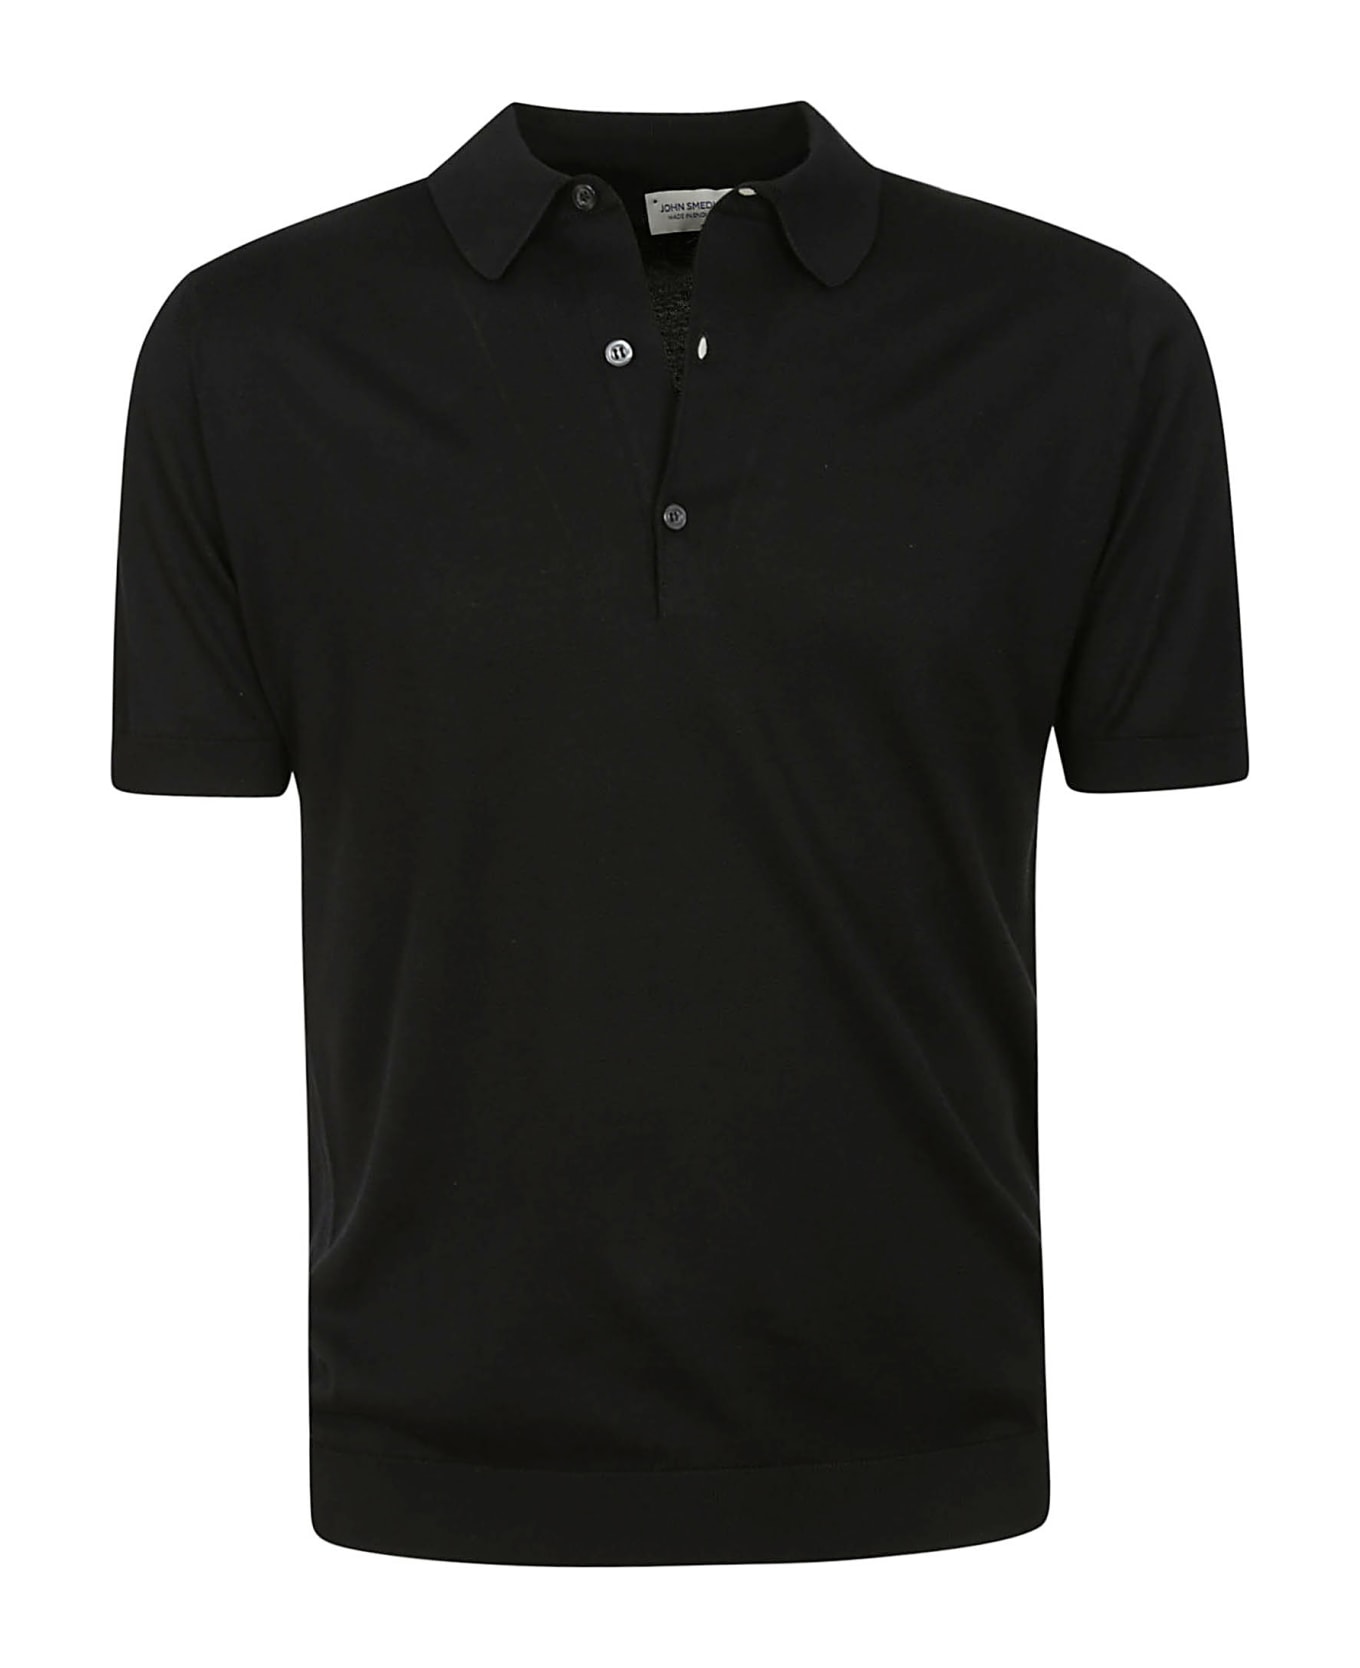 John Smedley Adrian Shirt Ss - Black